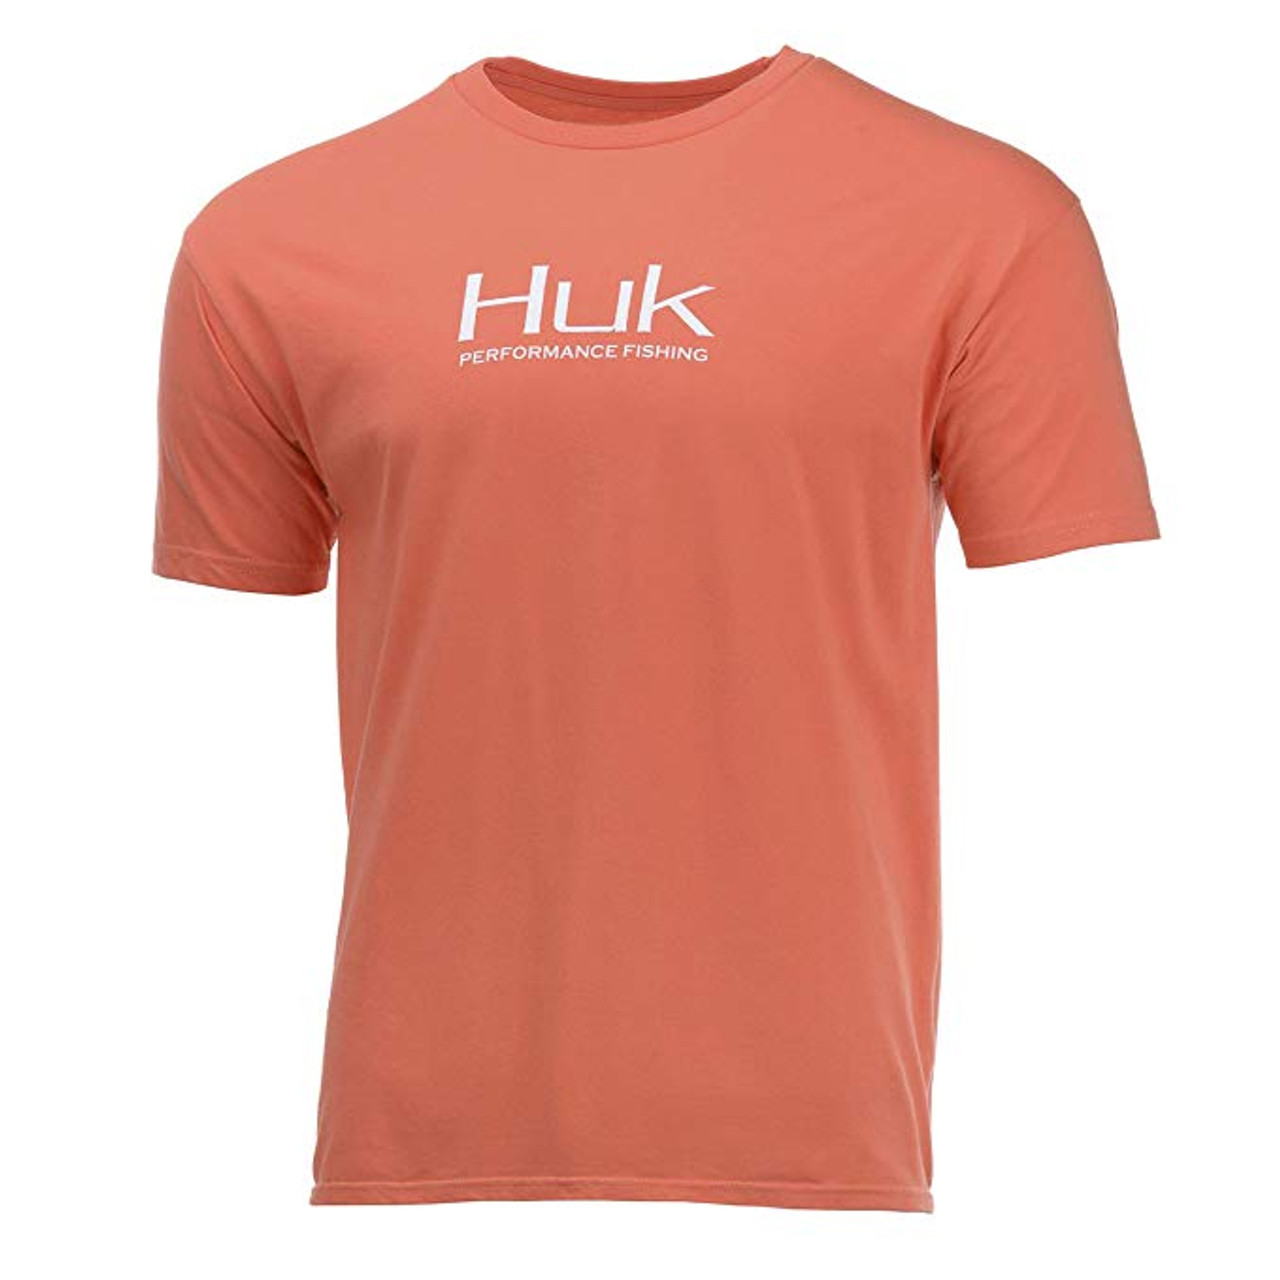 Huk Performance Fishing Short Sleeve Shirt, Coral, Large - H1000176-630-L